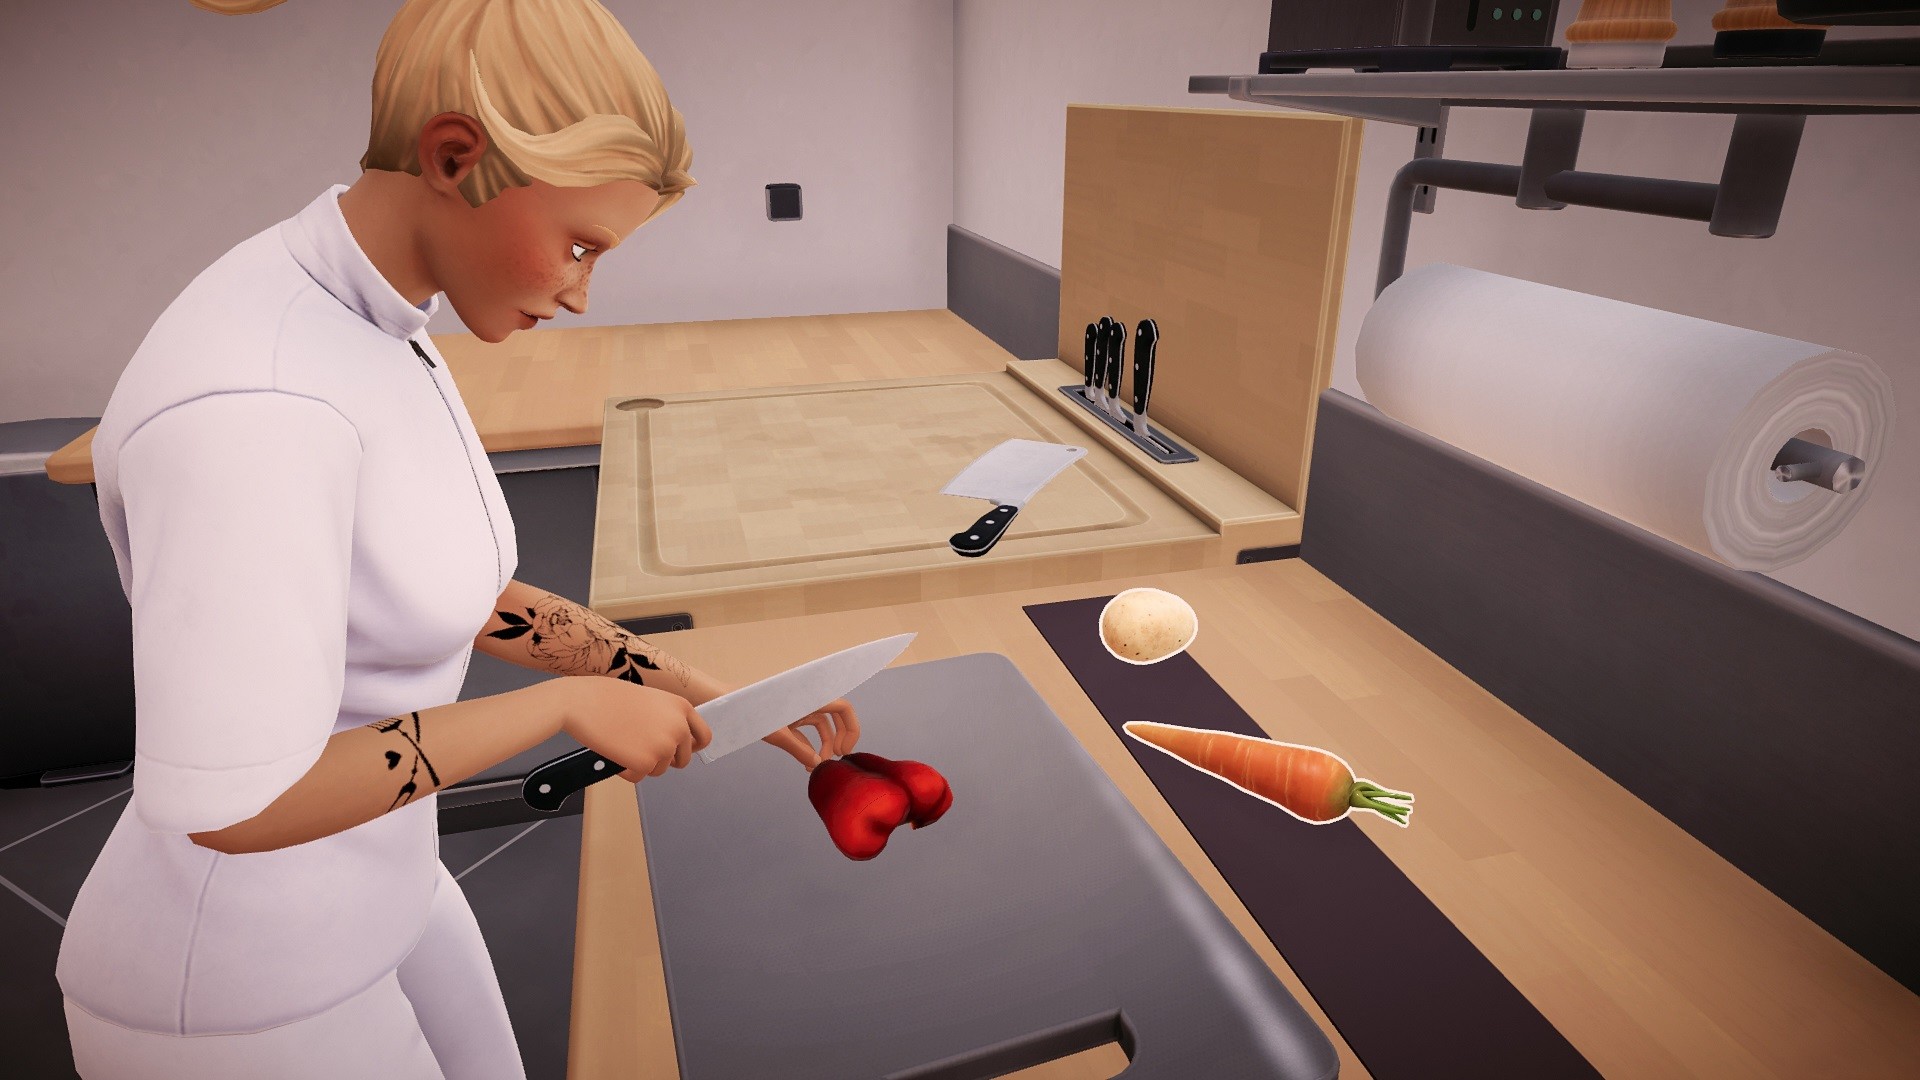 Chef Life: A Restaurant Simulator - screenshot 4